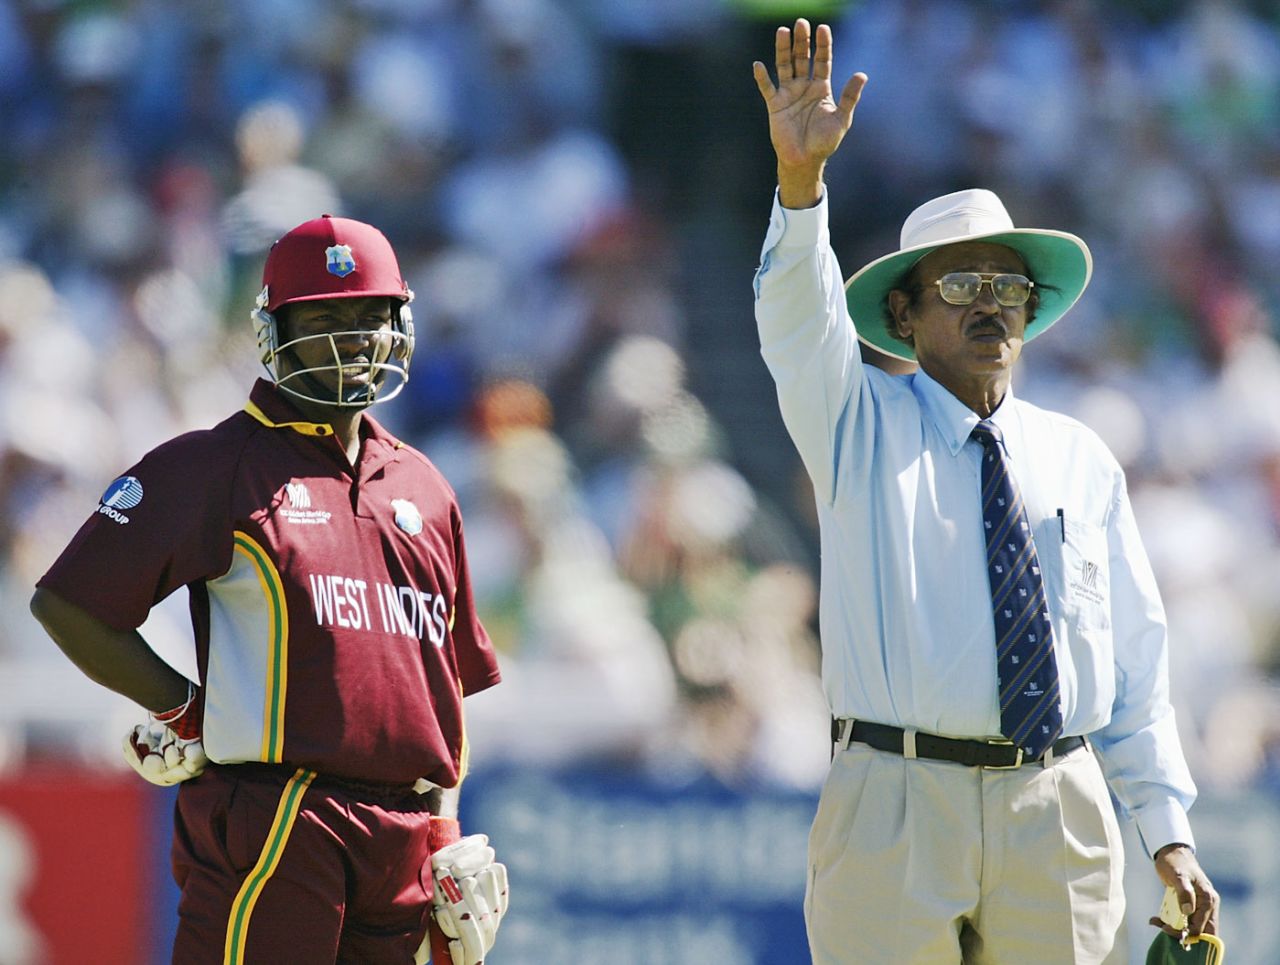 Umpire S Venkataraghavan signals a bye as Brian Lara looks on, South Africa v West Indies, World Cup, Pool B, Cape Town, Feb 9, 2003